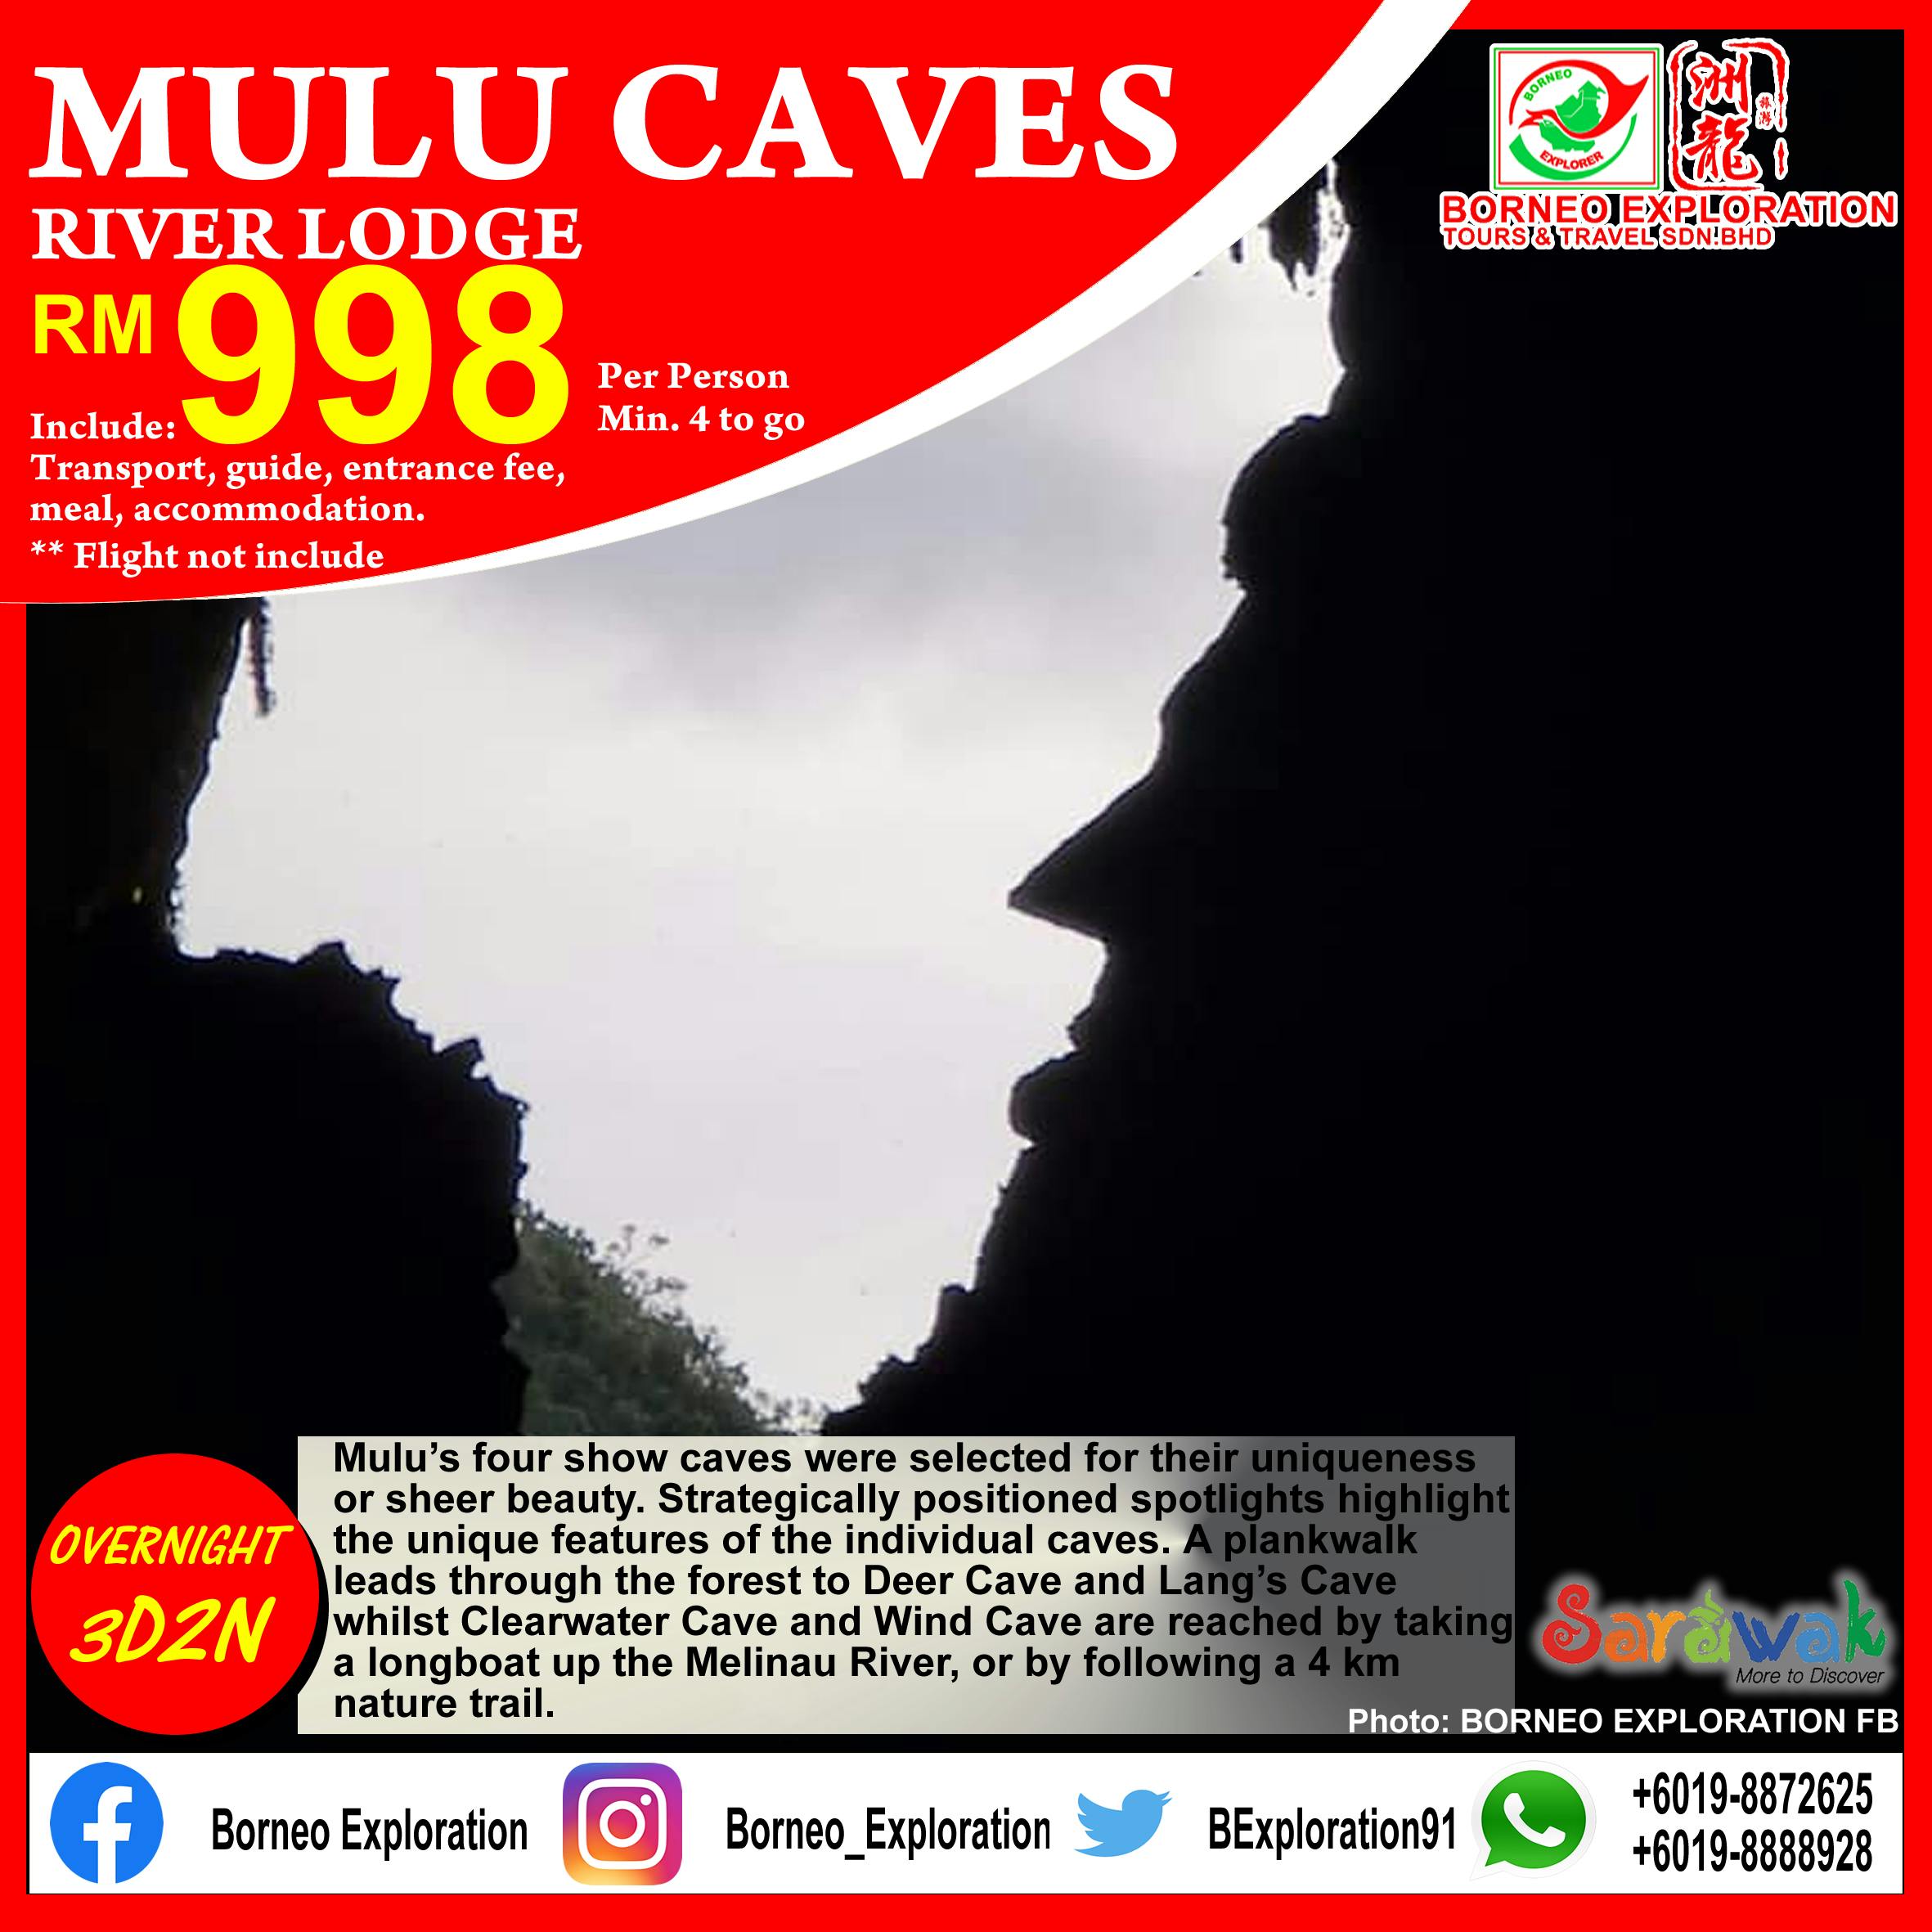 Mulu caves river lodge